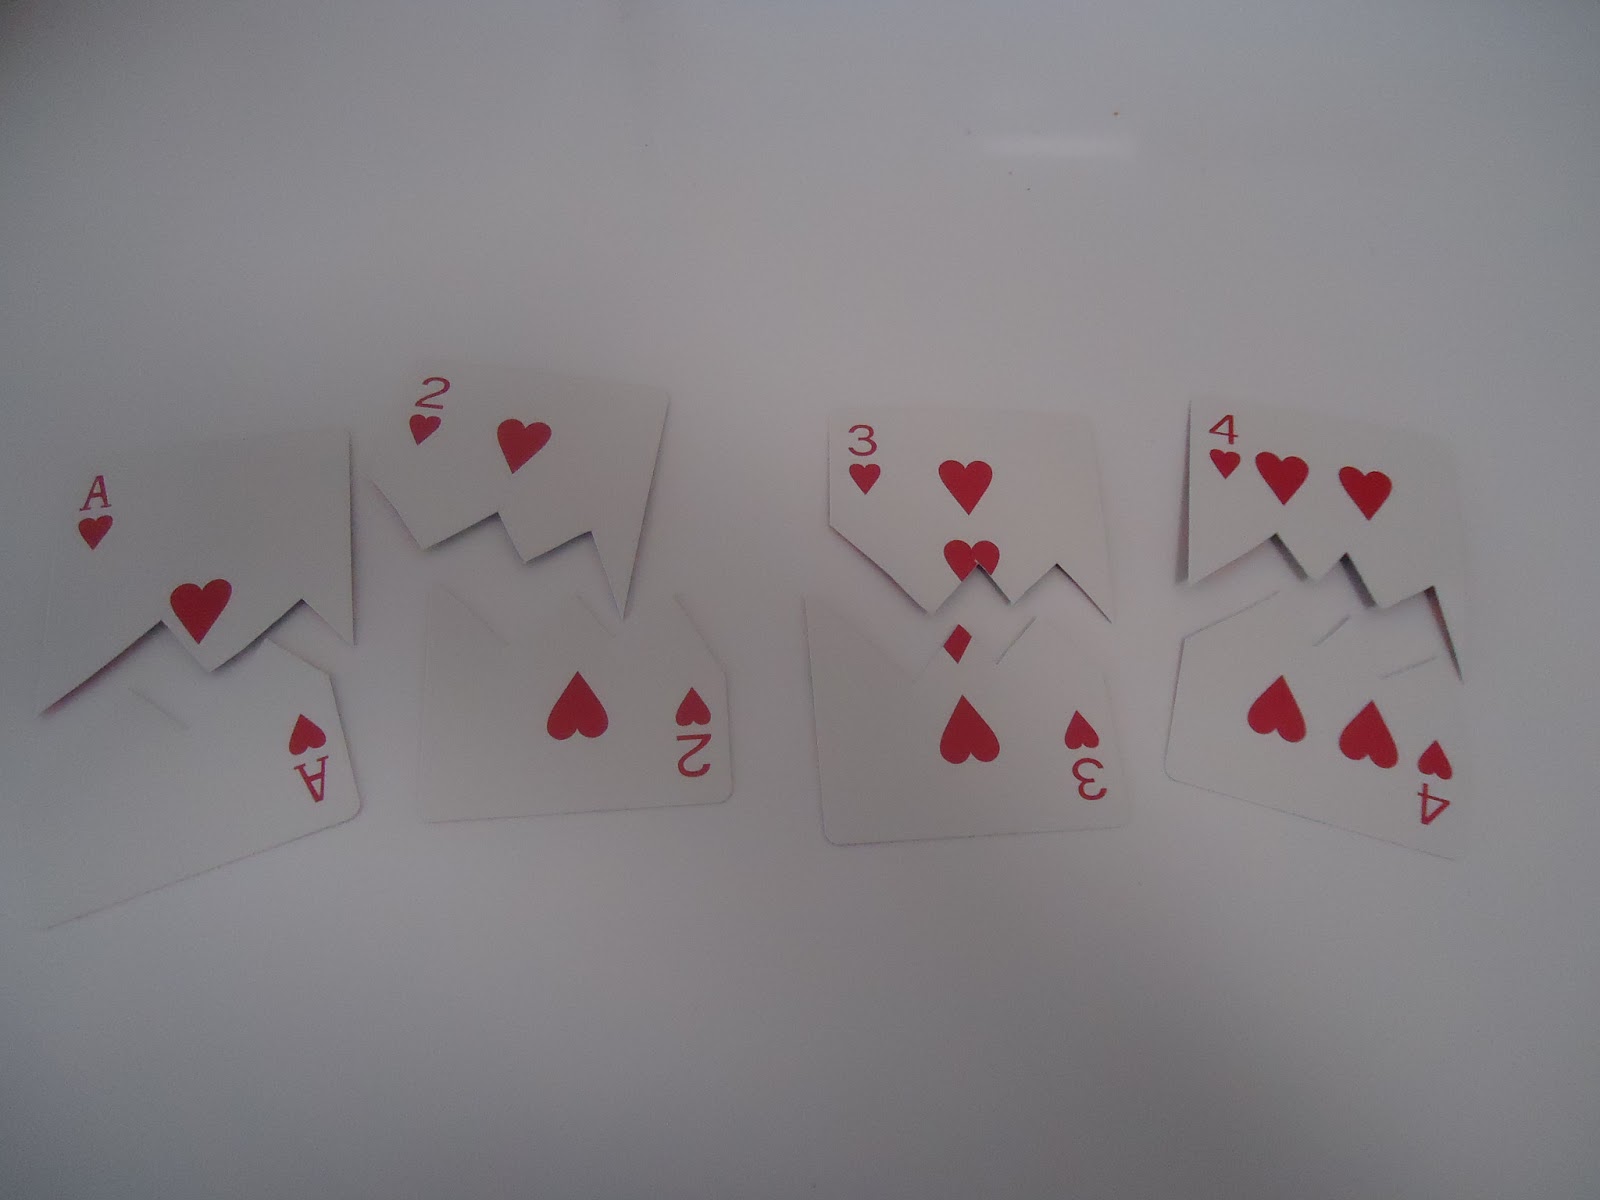 Cut each card in a zig-zag pattern horizontally.